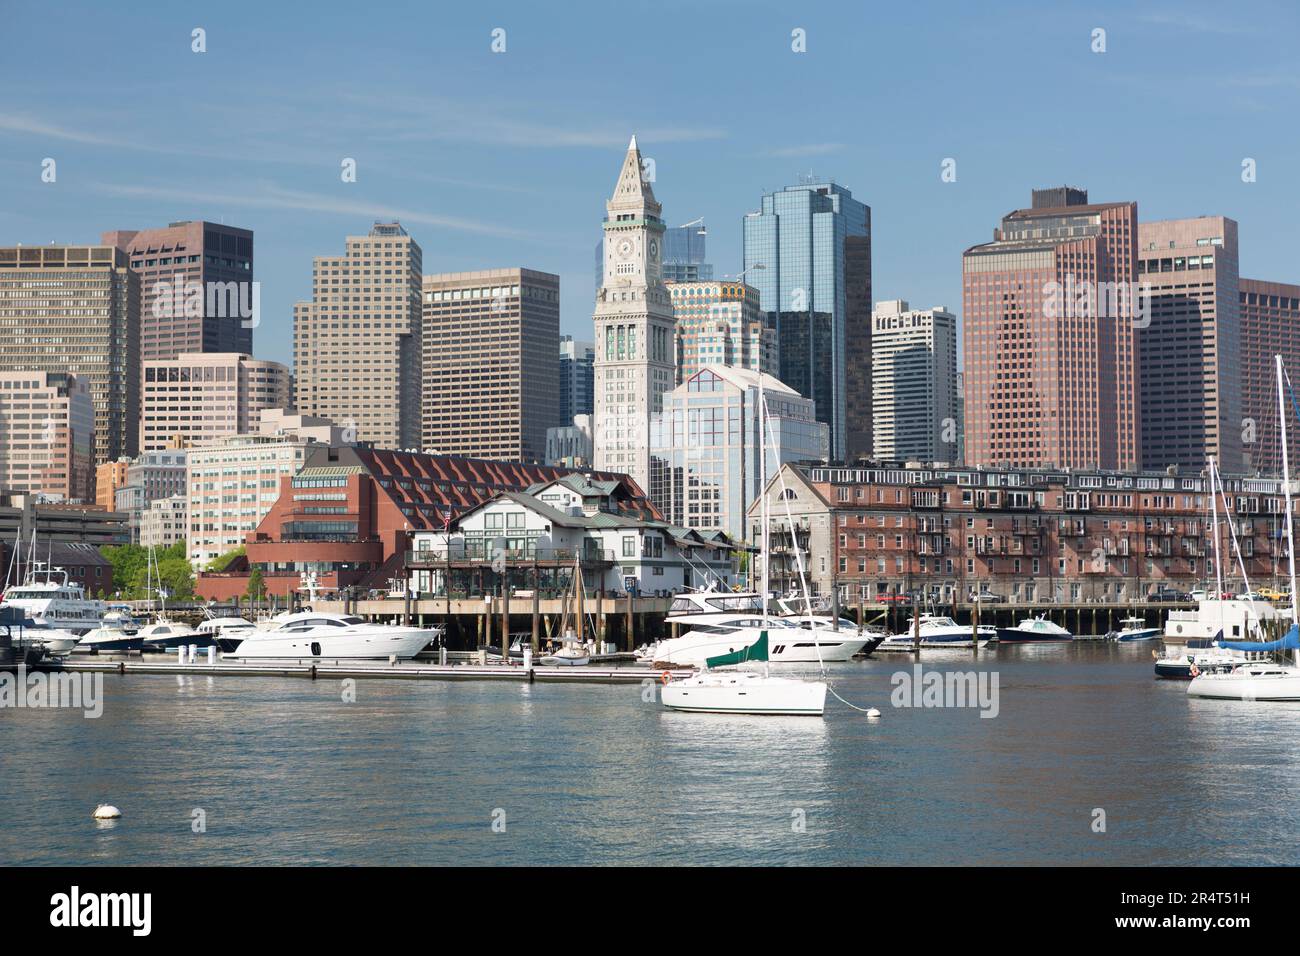 USA, Massachusetts, Boston, Boston Skyline from water with harbor boats. Stock Photo